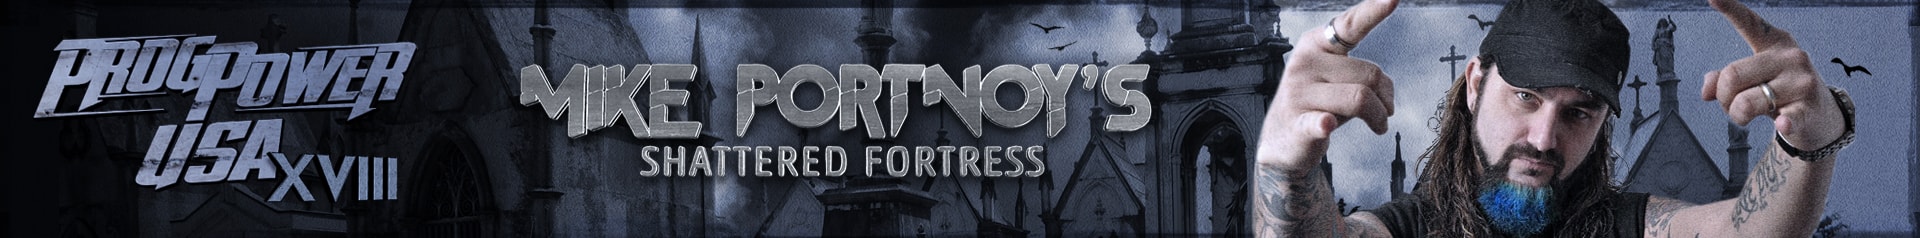 Mike Portnoy's Shattered Fortress Web Banner